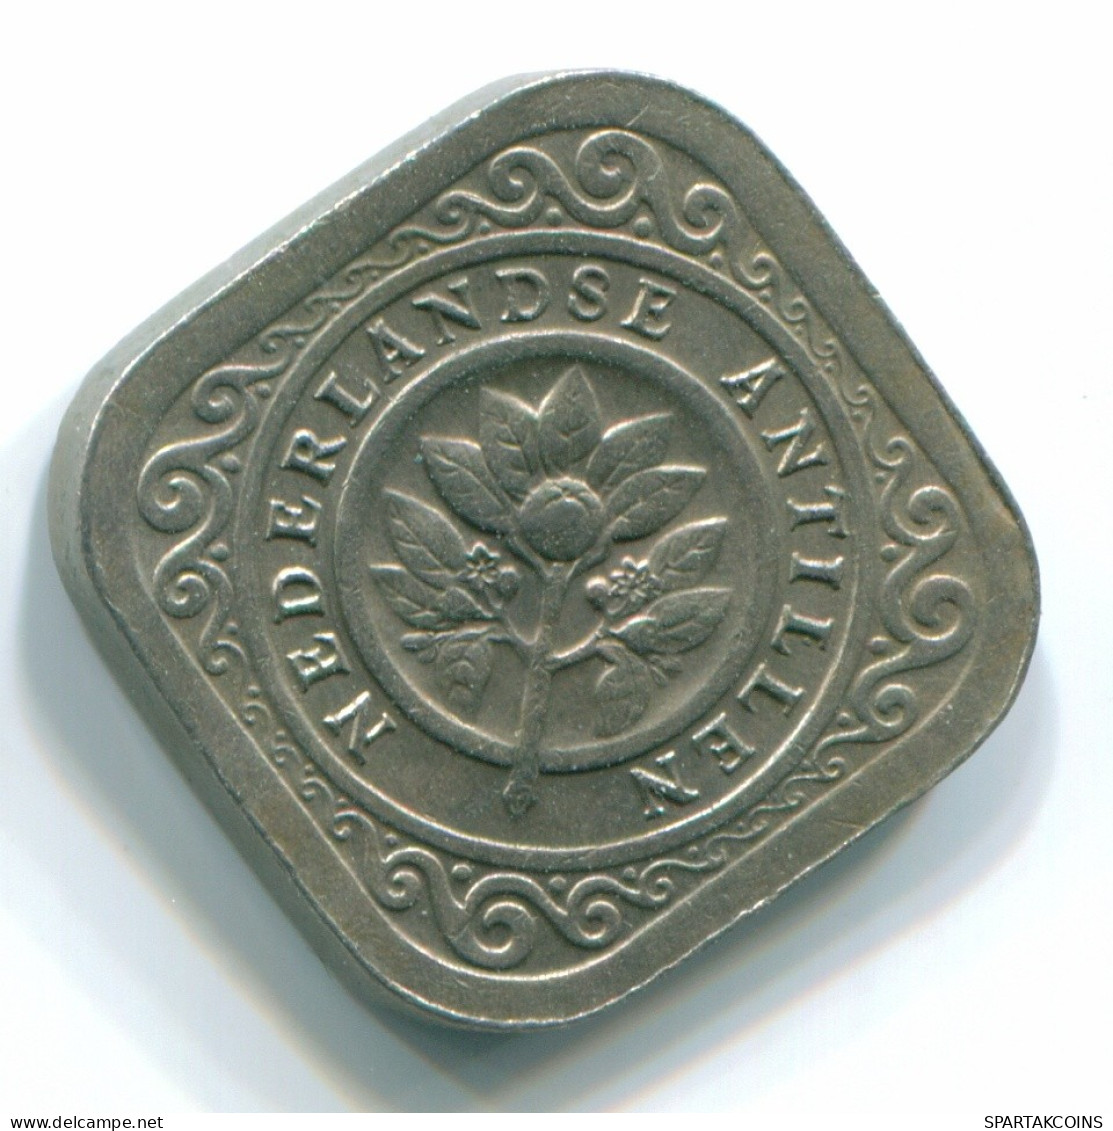 5 CENTS 1970 NIEDERLÄNDISCHE ANTILLEN Nickel Koloniale Münze #S12490.D.A - Netherlands Antilles